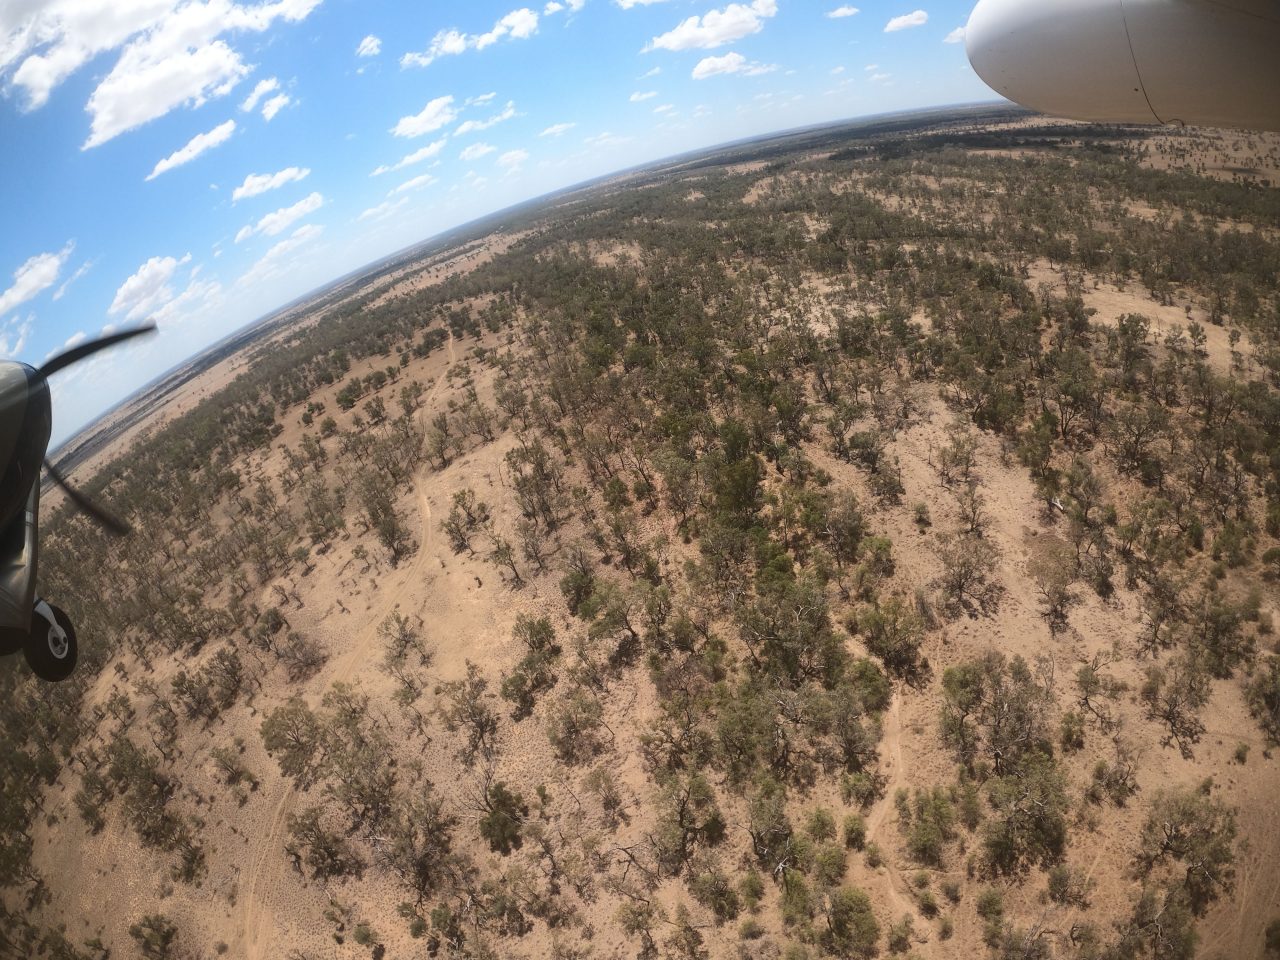 Outback floodplain vegetation